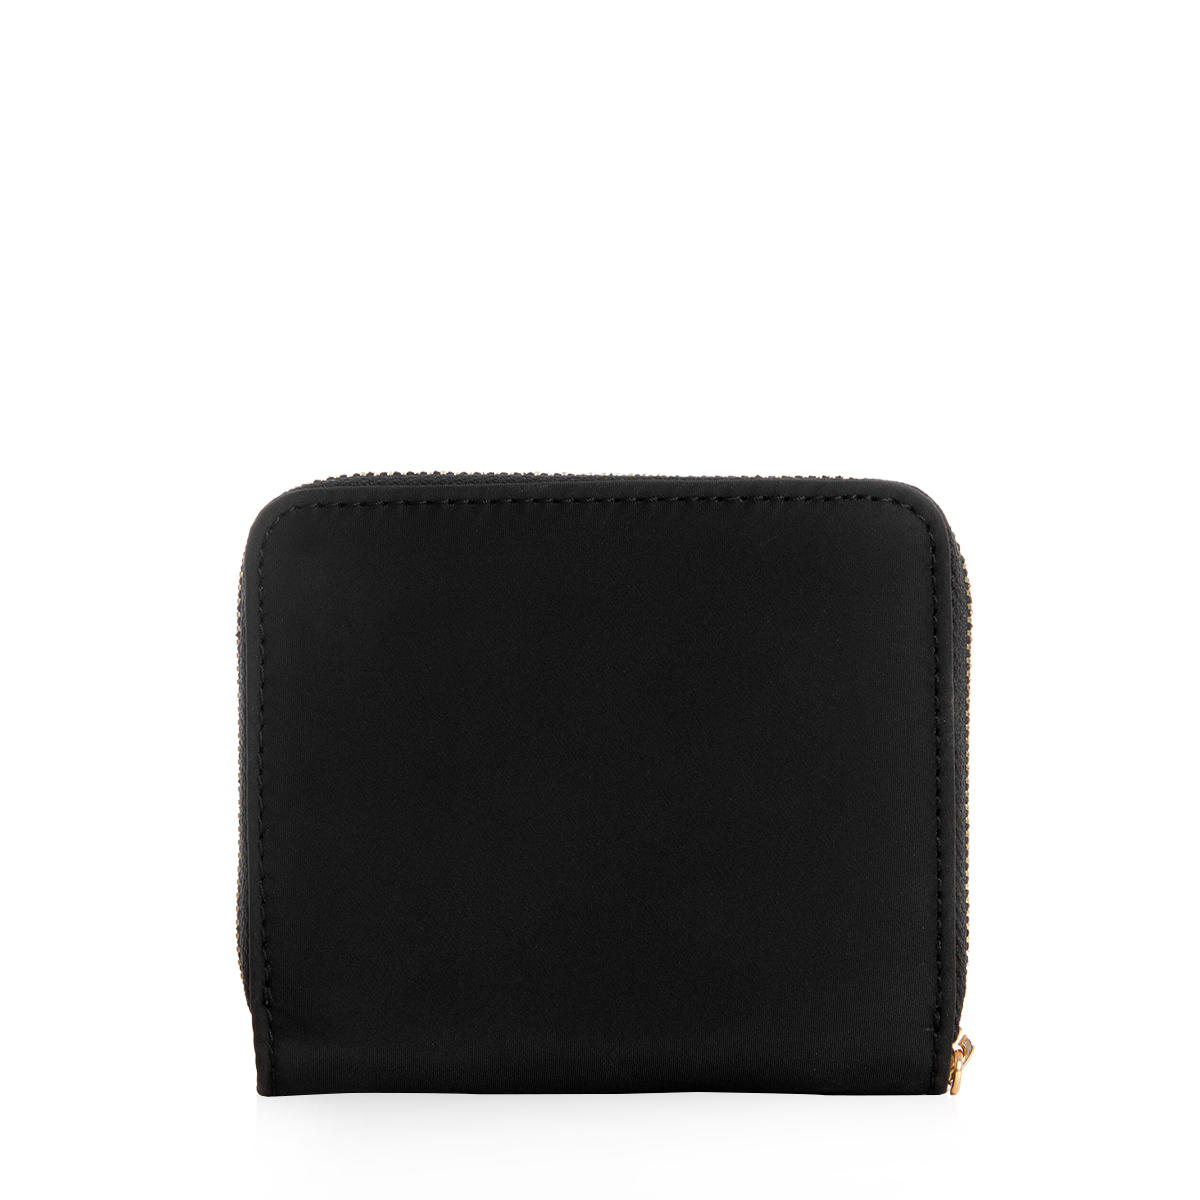 Buy Eco Gemma SLG Small Zip Around Wallet - Black Online in